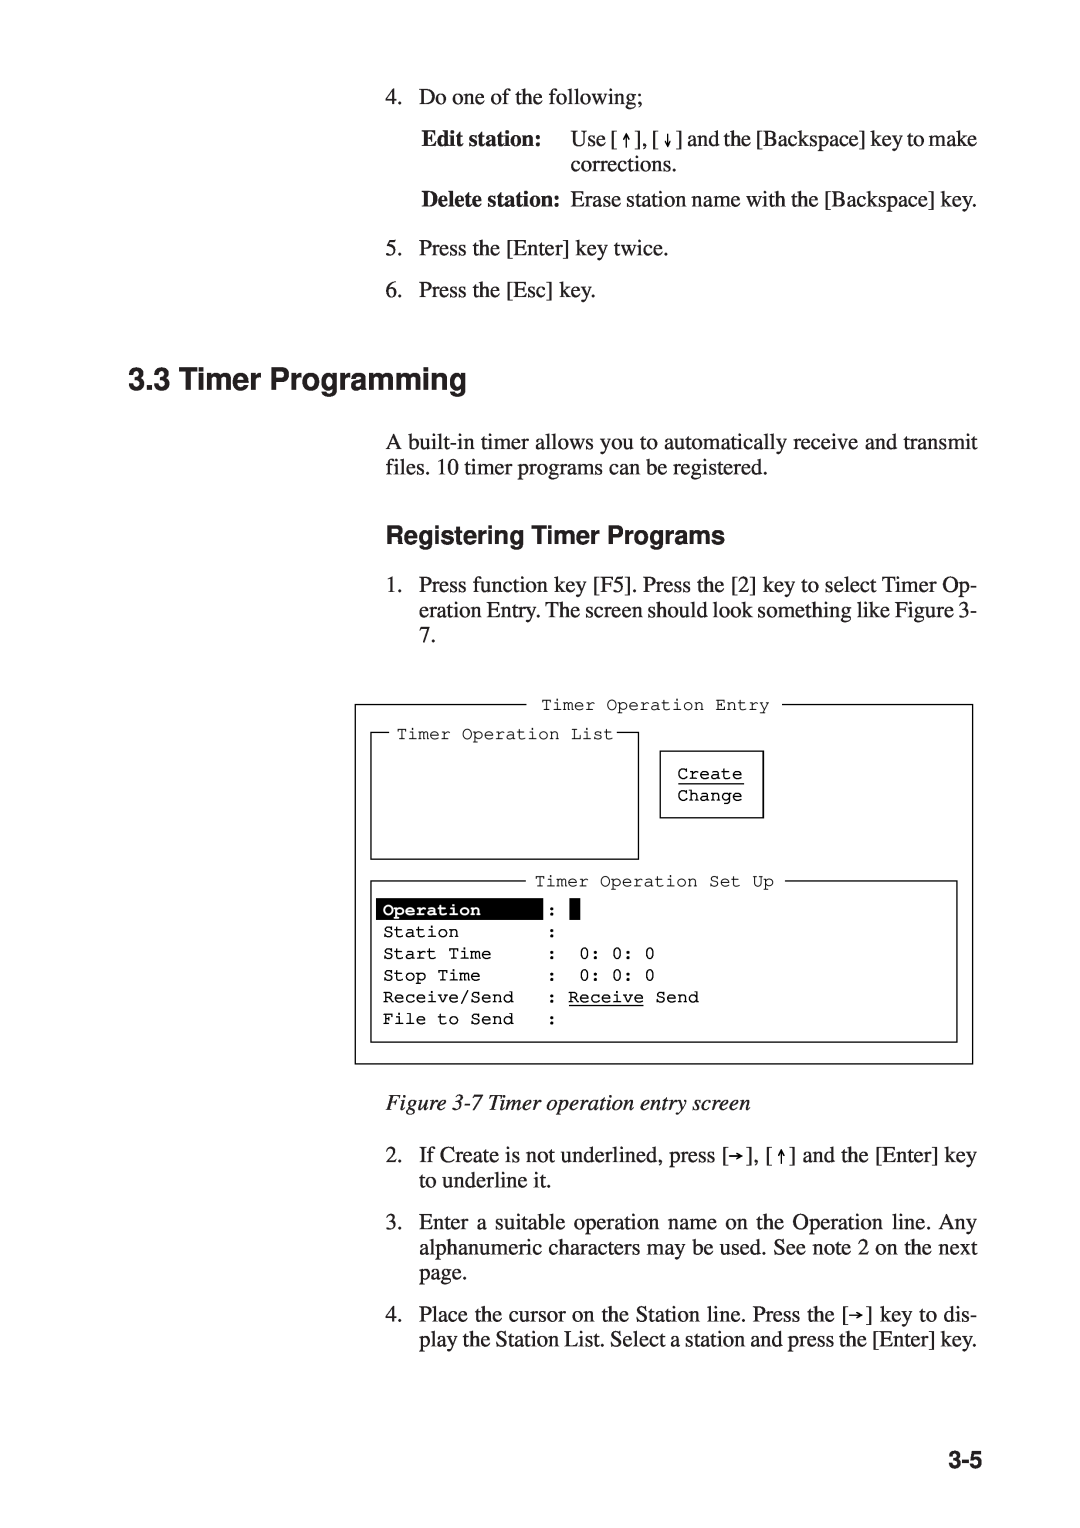 Furuno RC-1500-1T manual Timer Programming, Registering Timer Programs, 7 Timer operation entry screen 